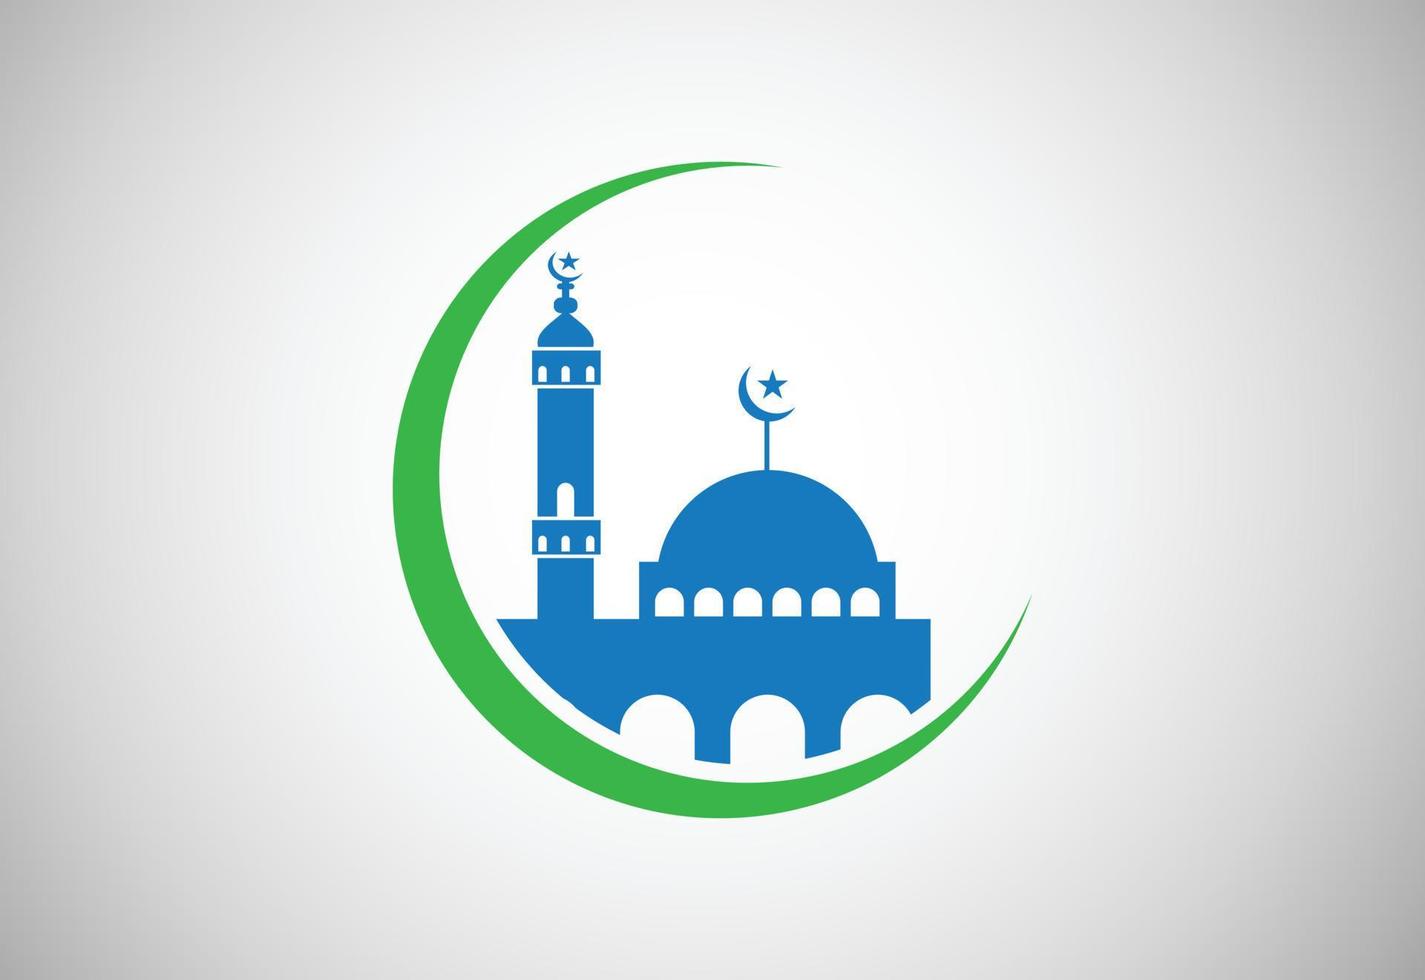 Mosque logo design, Islamic logo template, Vector illustration